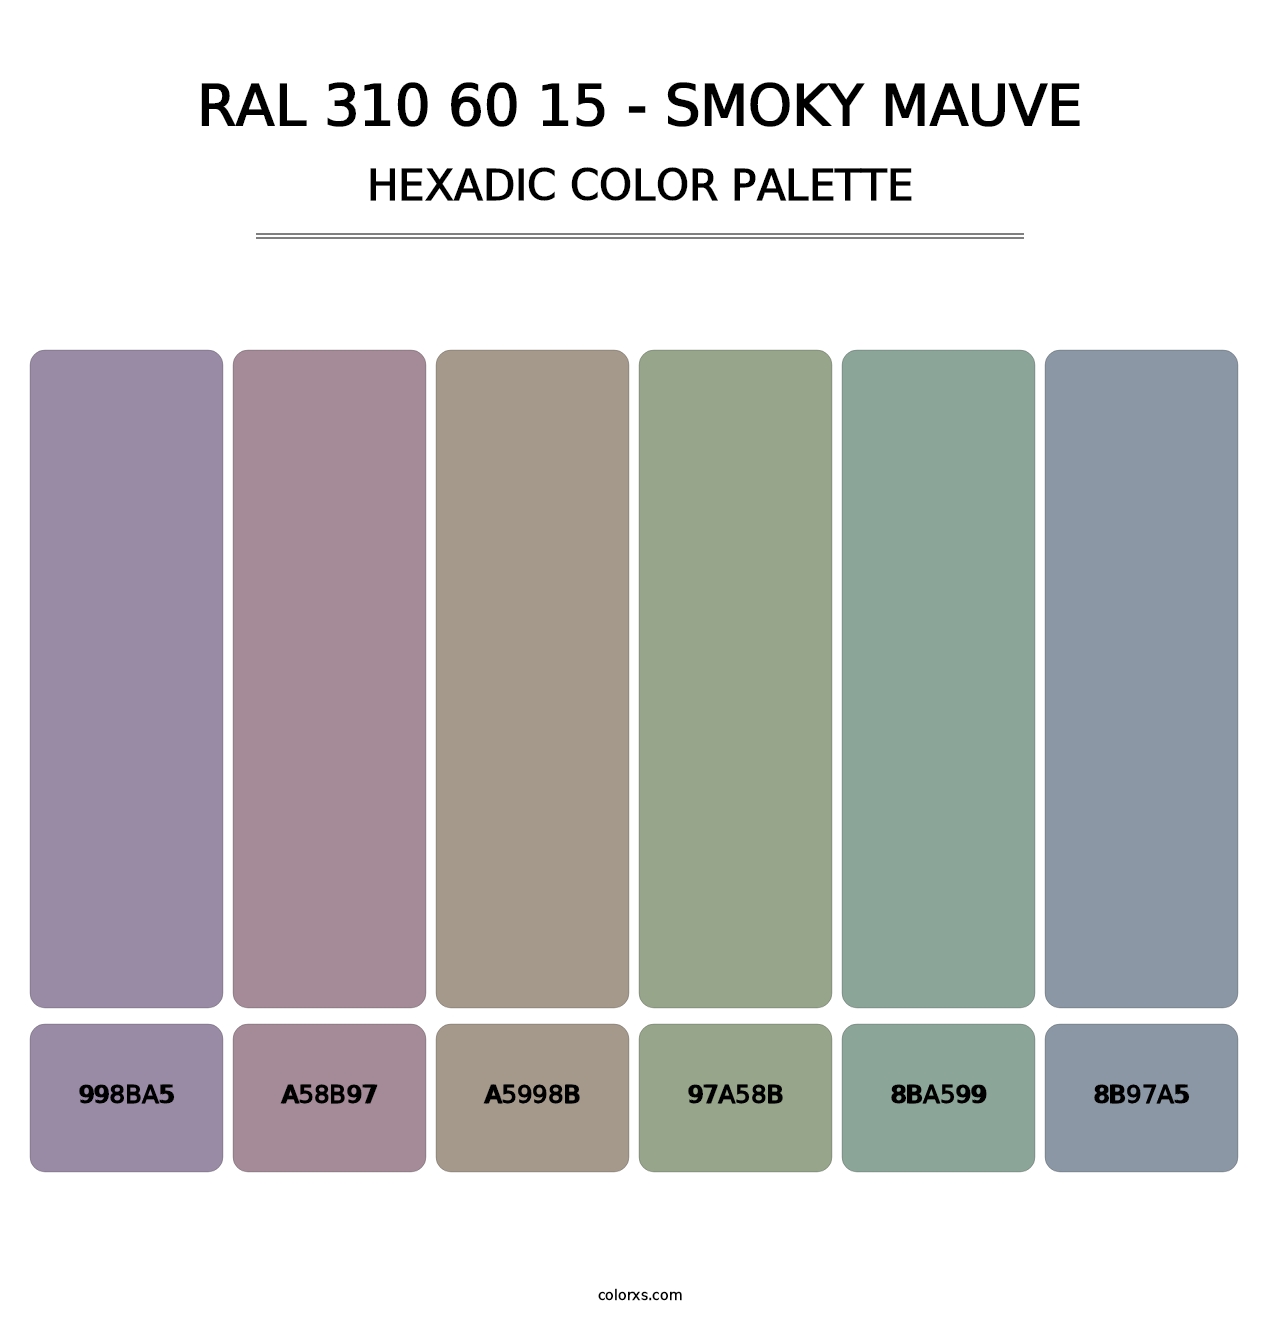 RAL 310 60 15 - Smoky Mauve - Hexadic Color Palette